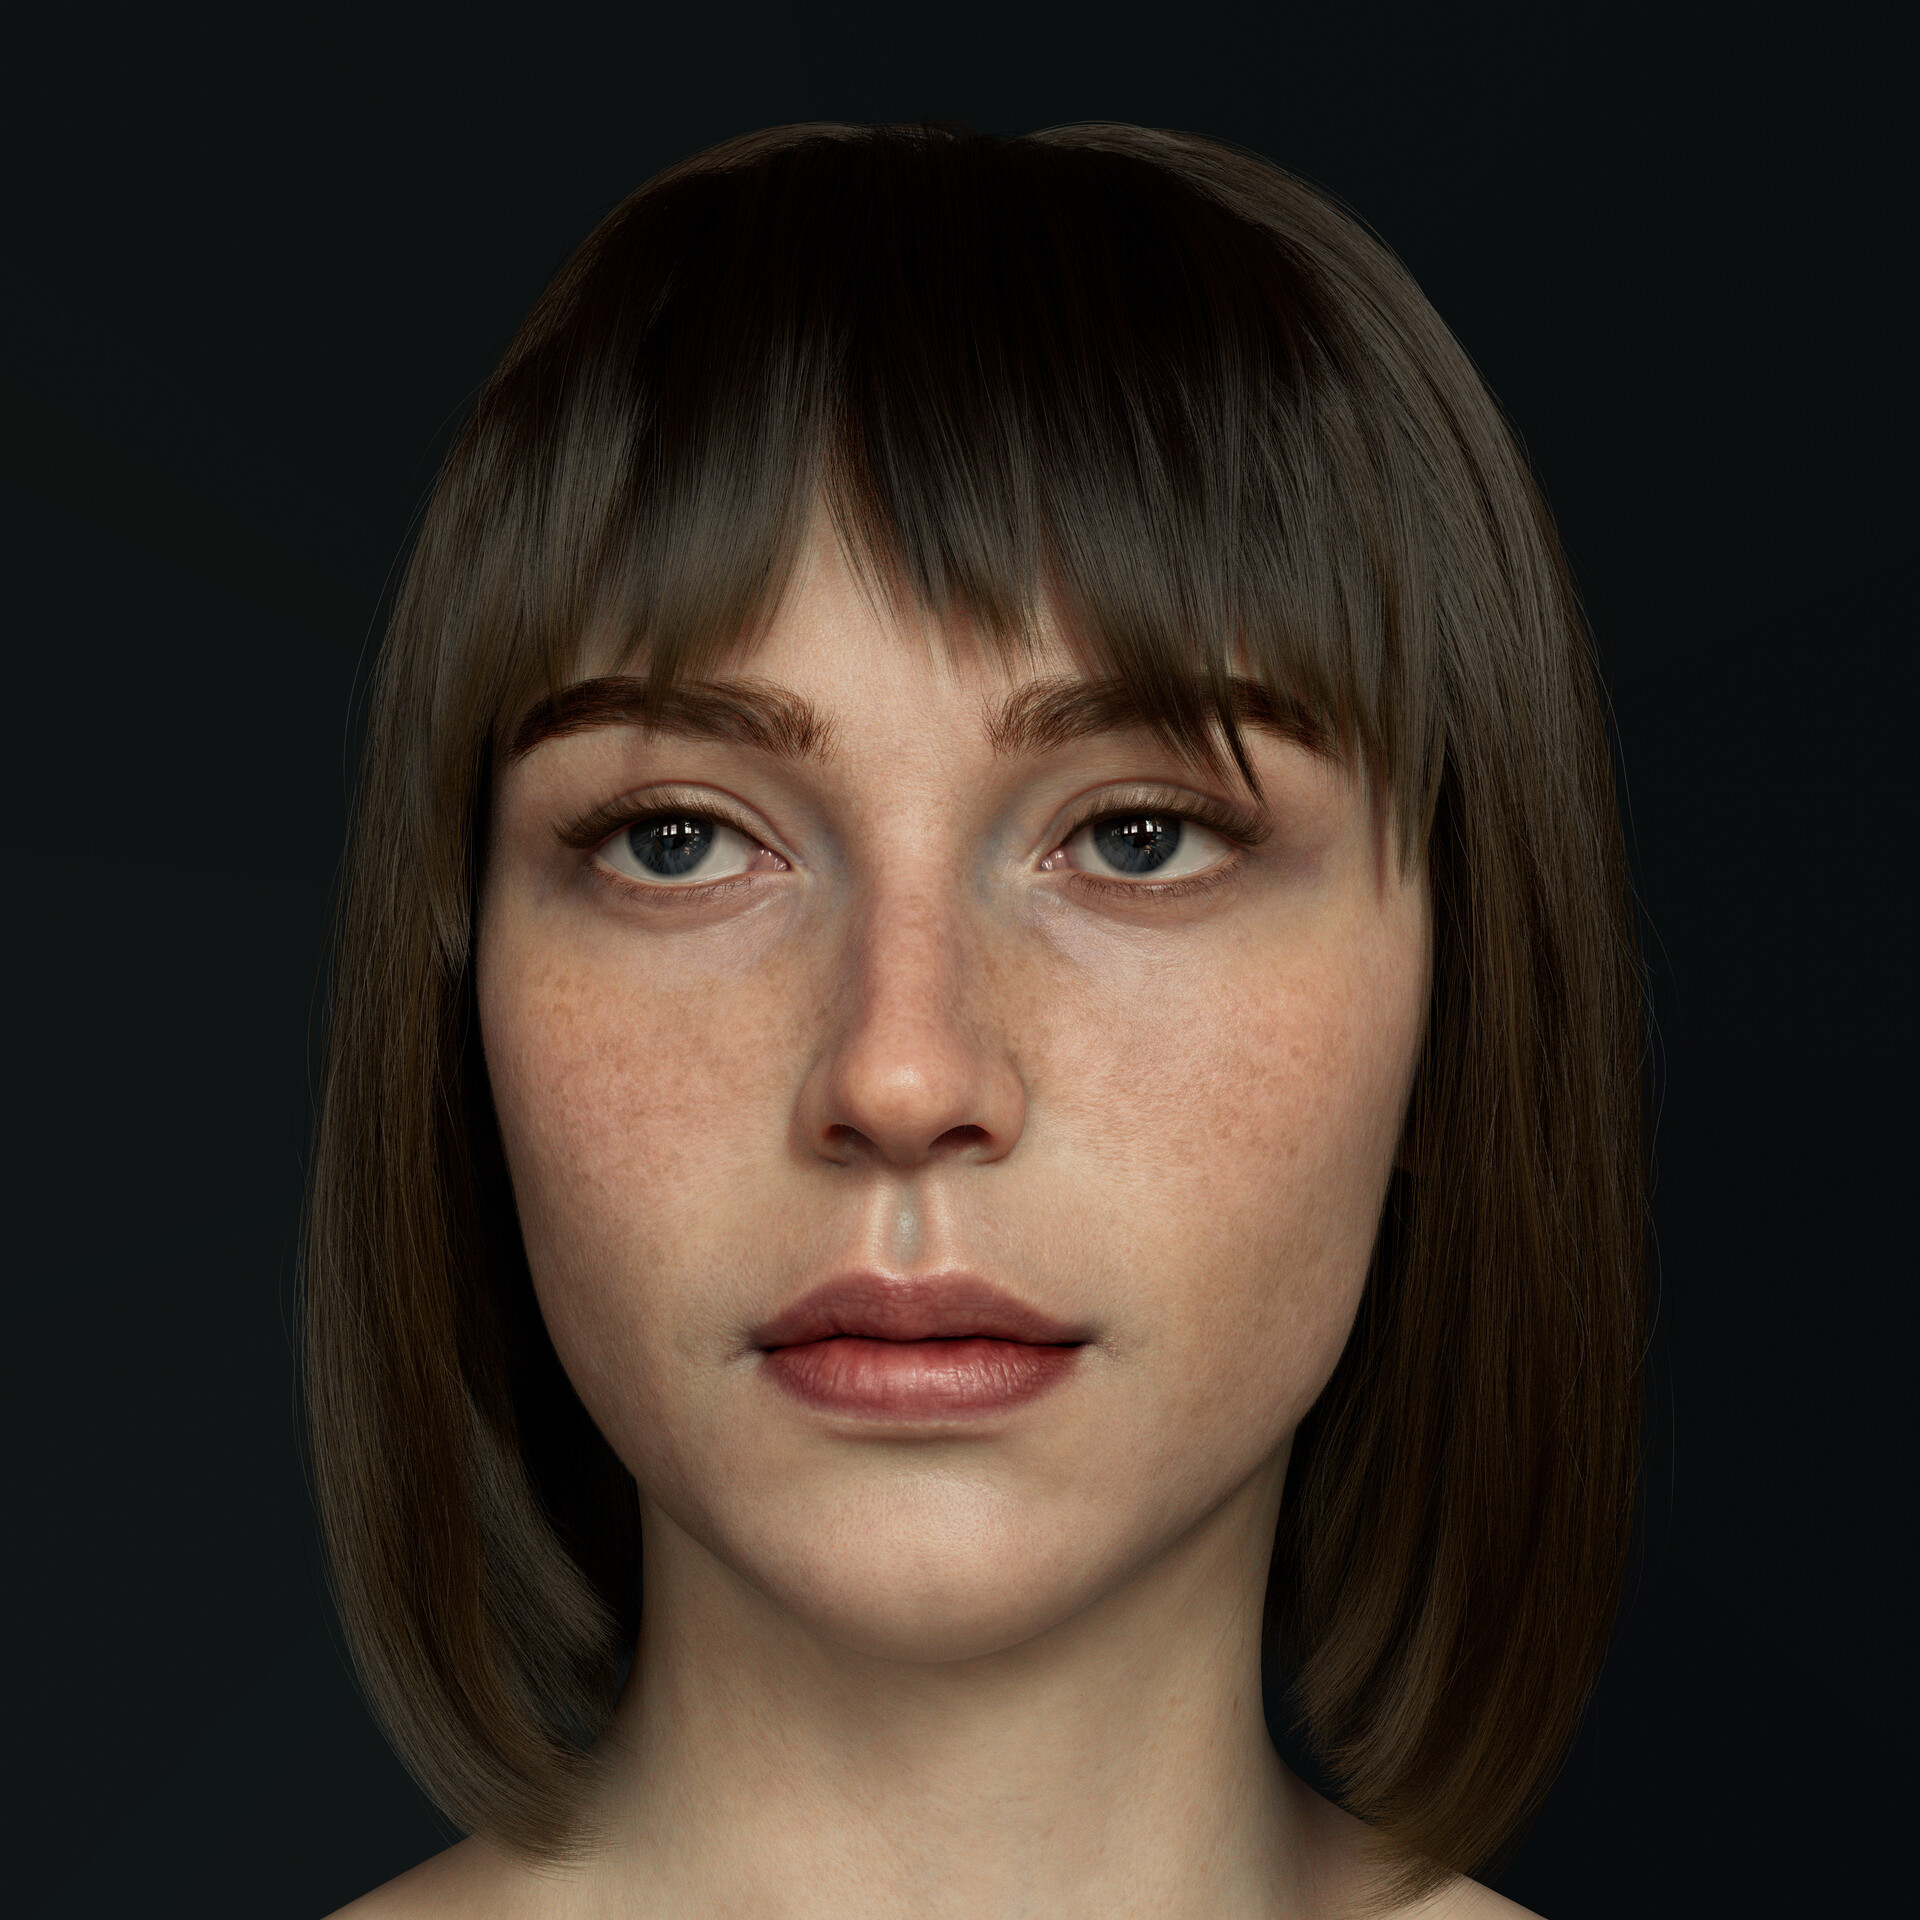 ArtStation - Evie Portrait